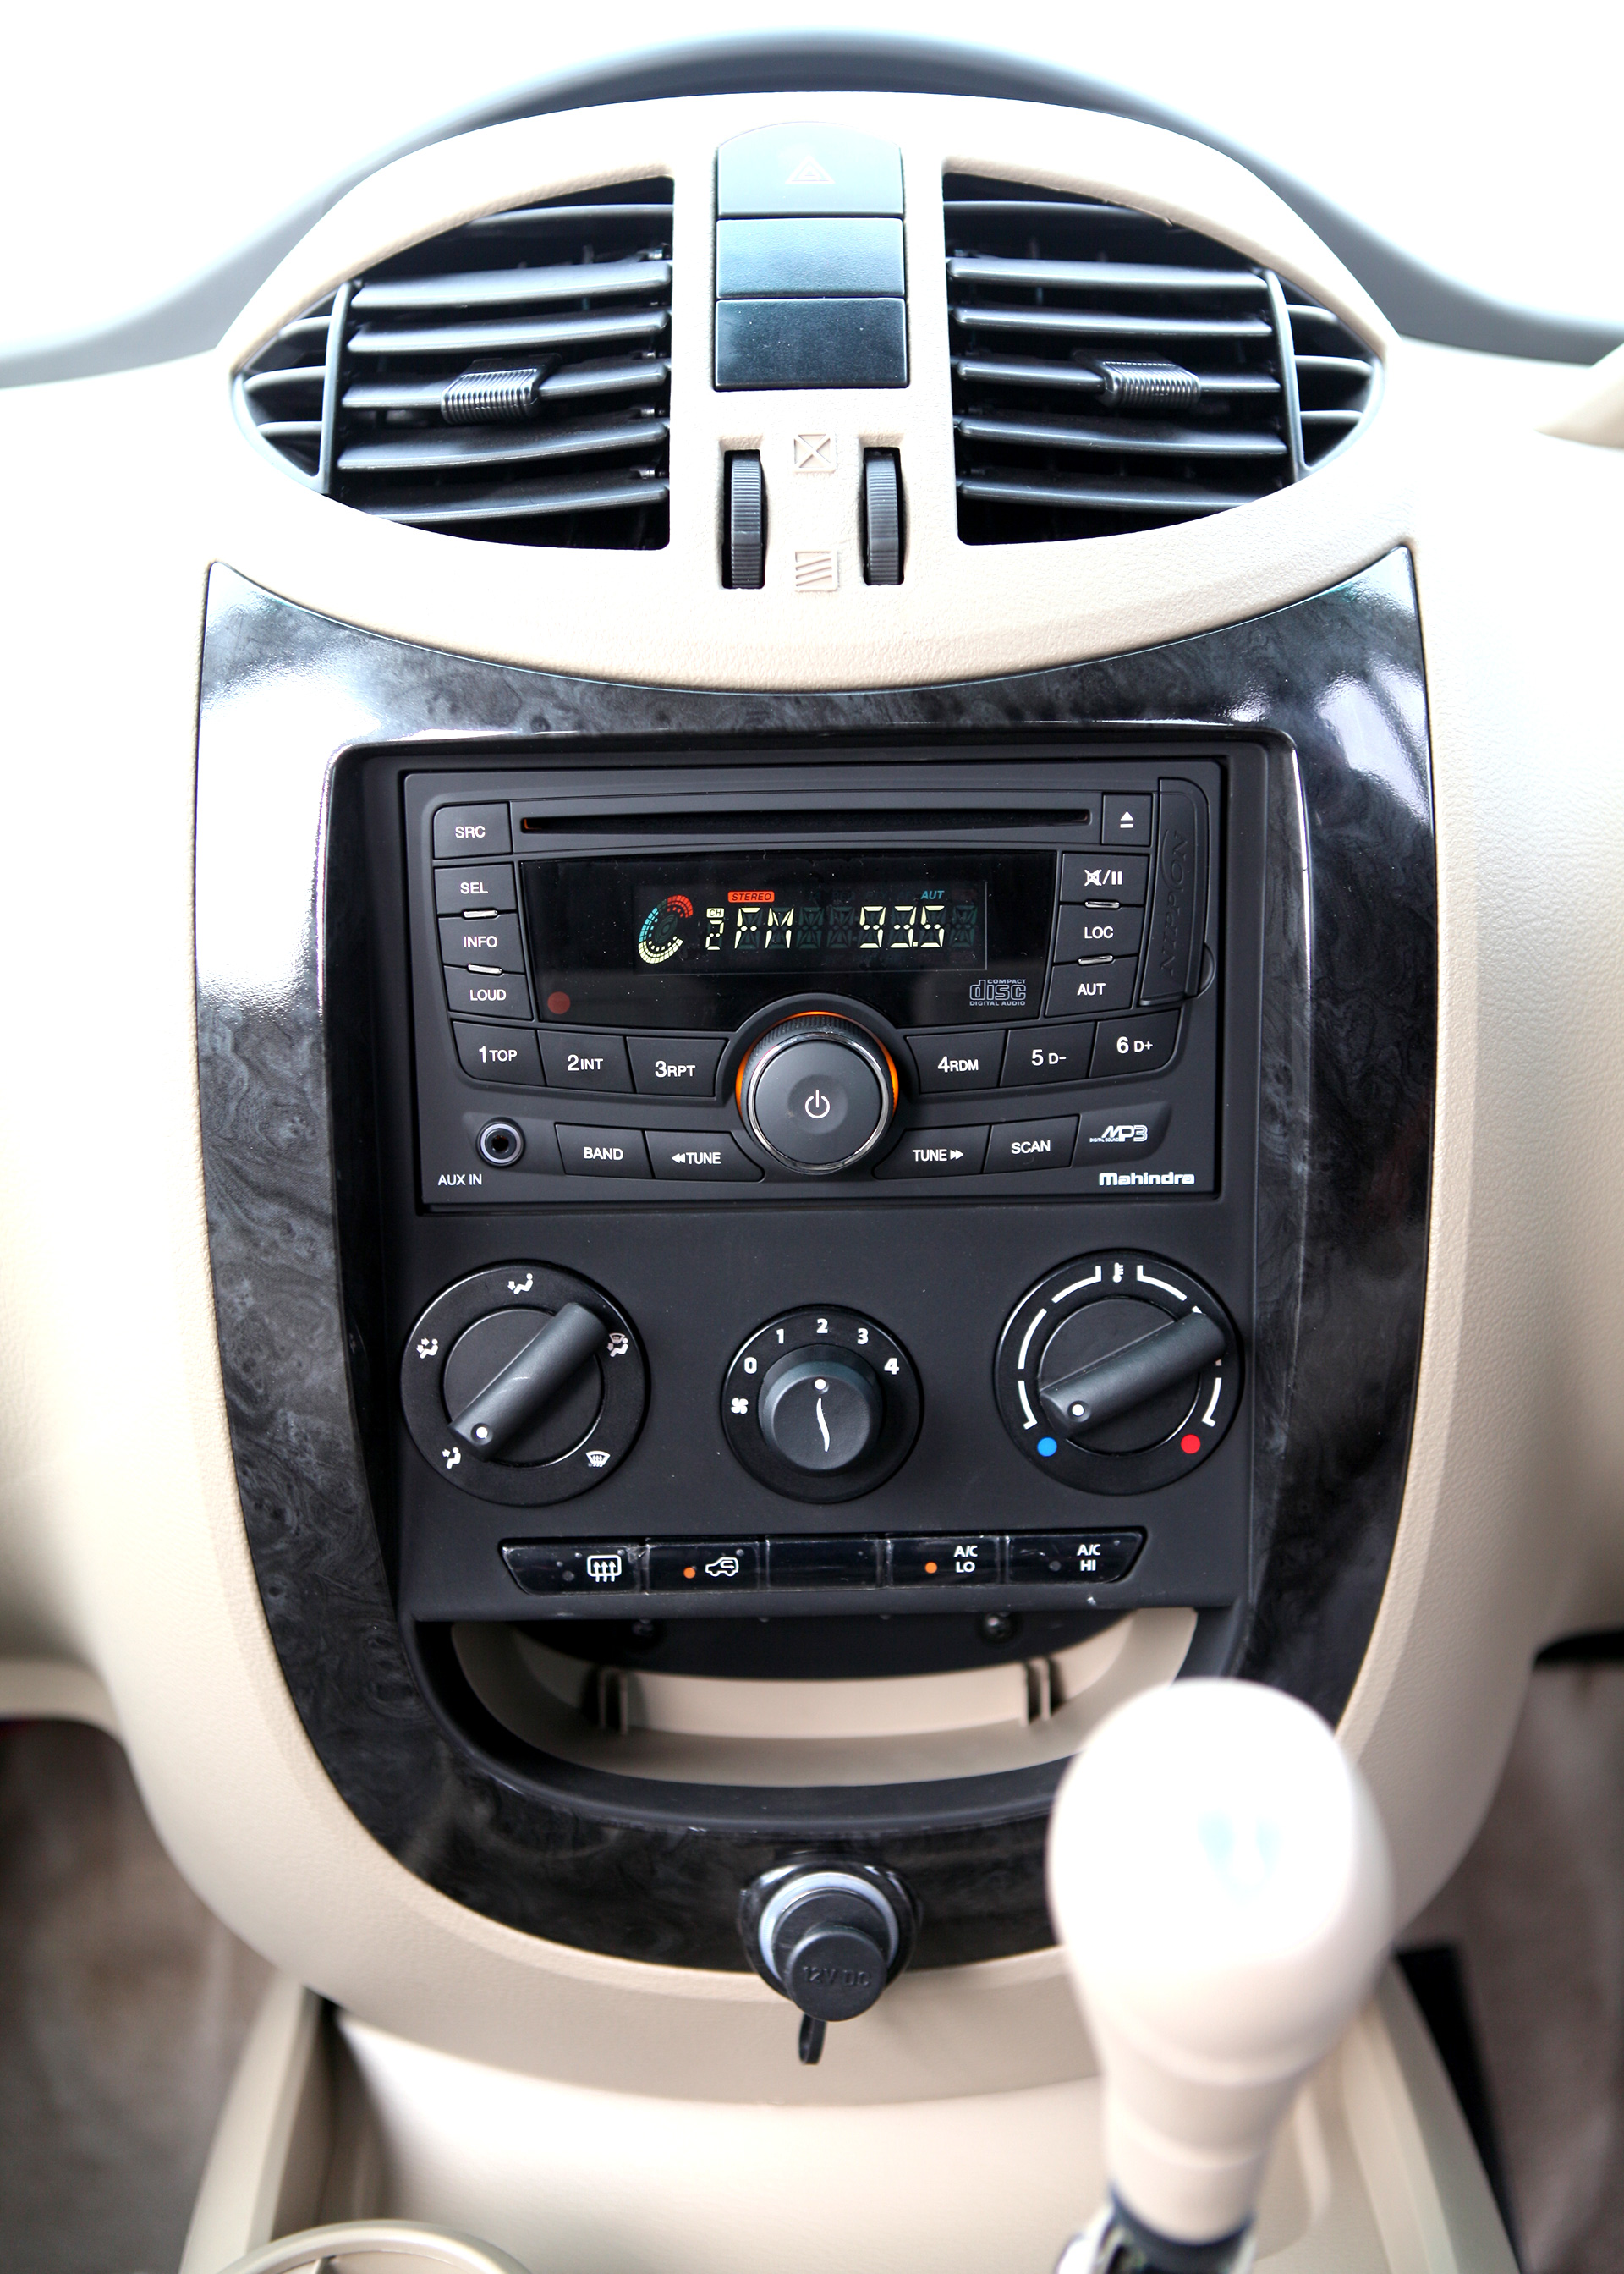 Mahindra Xylo 2014 Interior Car Photos Overdrive